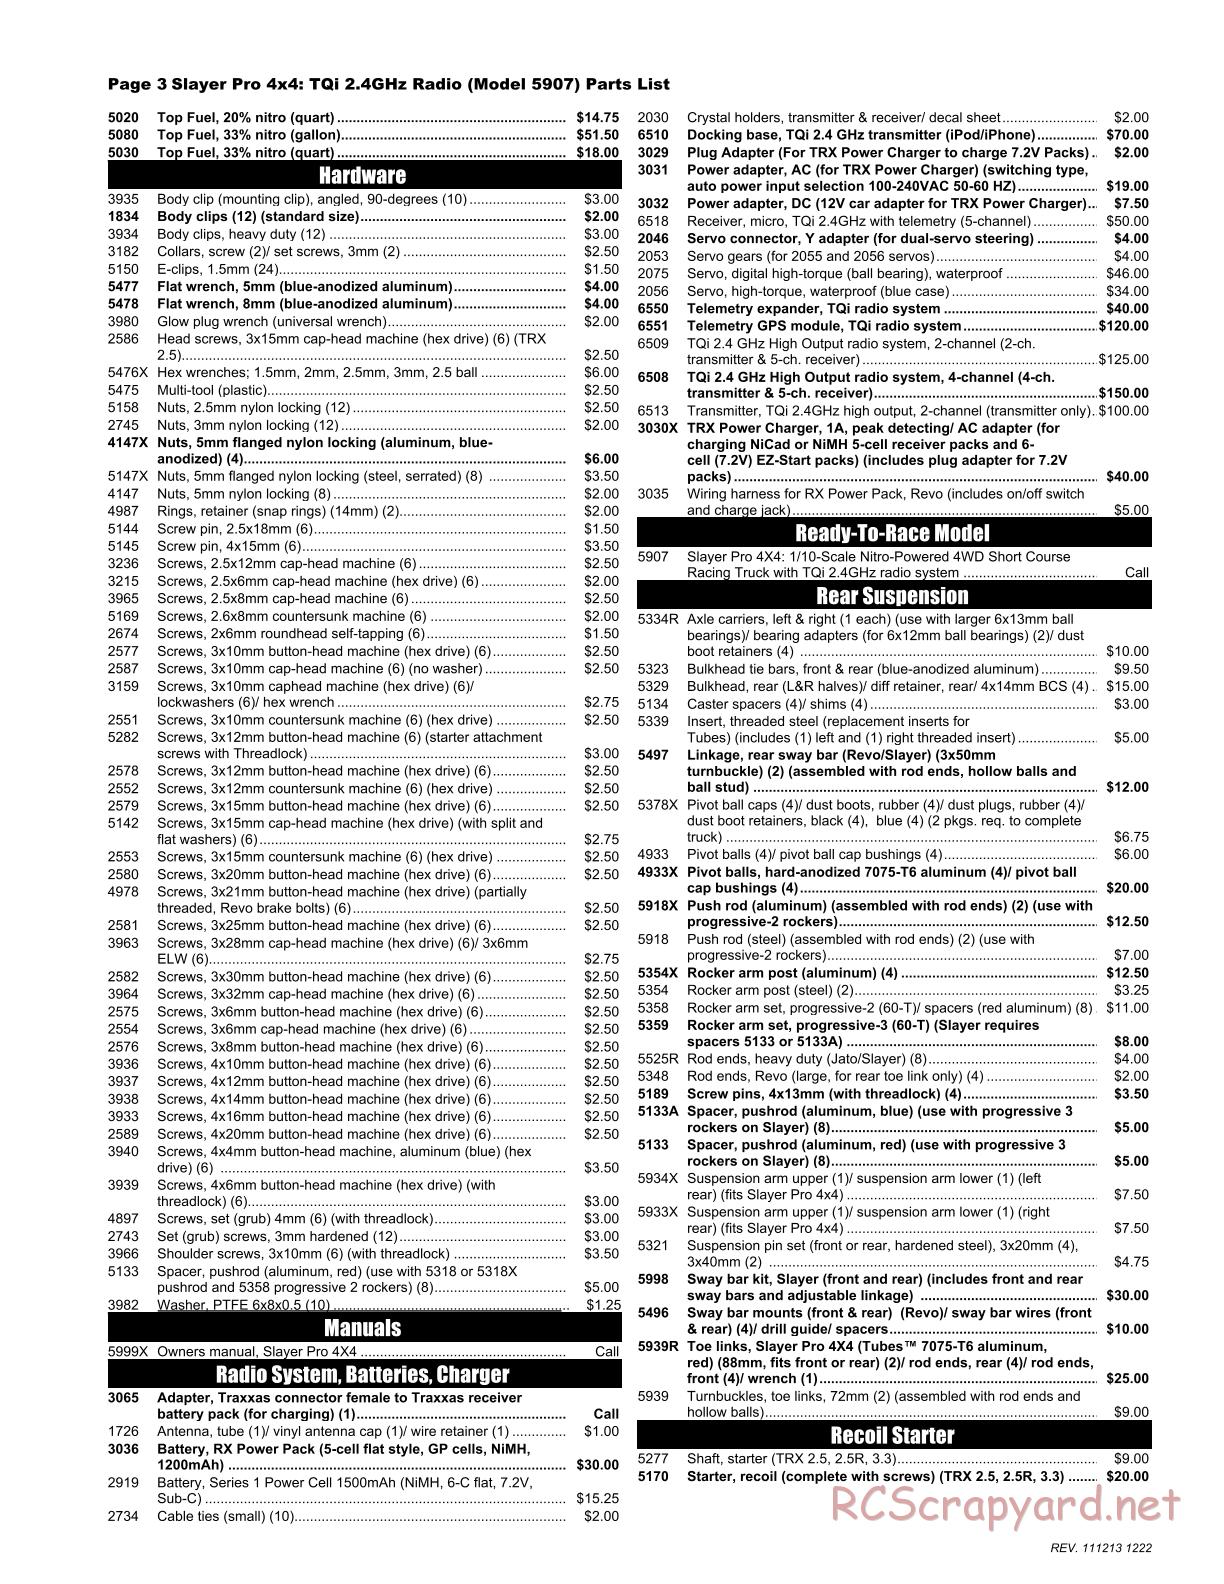 Traxxas - Slayer Pro 4x4 - Parts List - Page 3